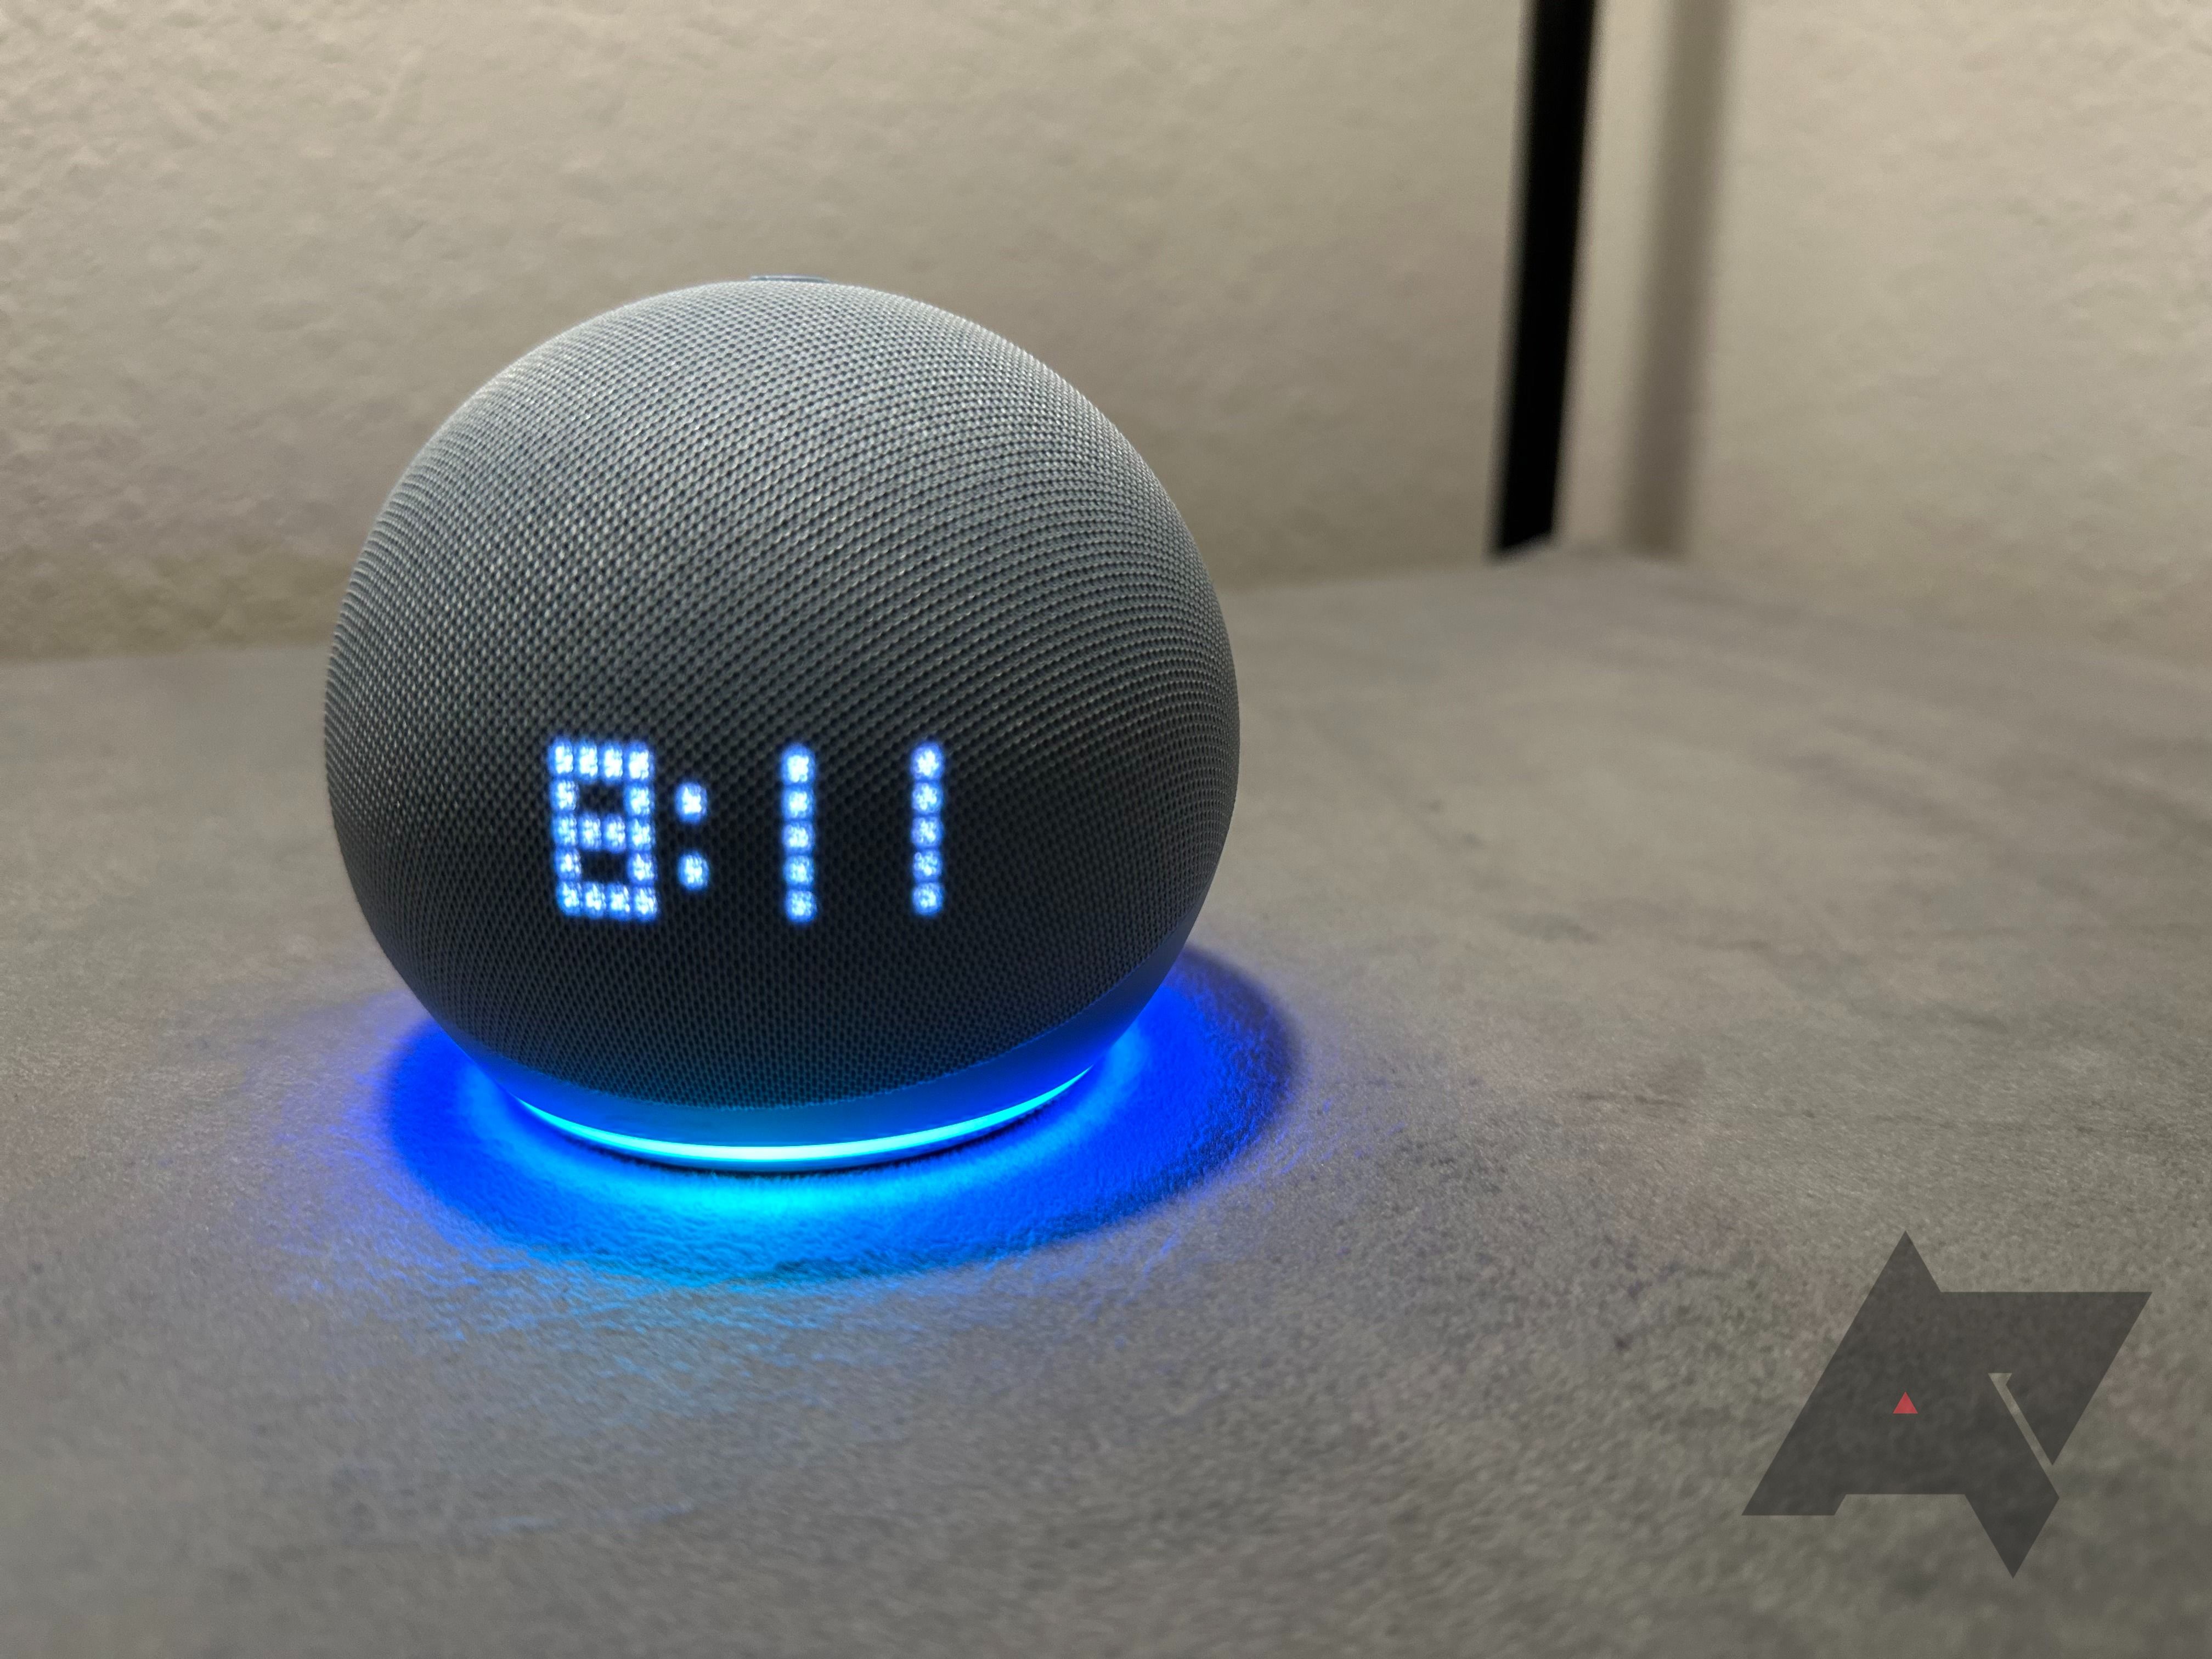 Sebuah Amazon Echo Dot dengan Jam dengan cahaya biru bercahaya yang menunjukkan waktu